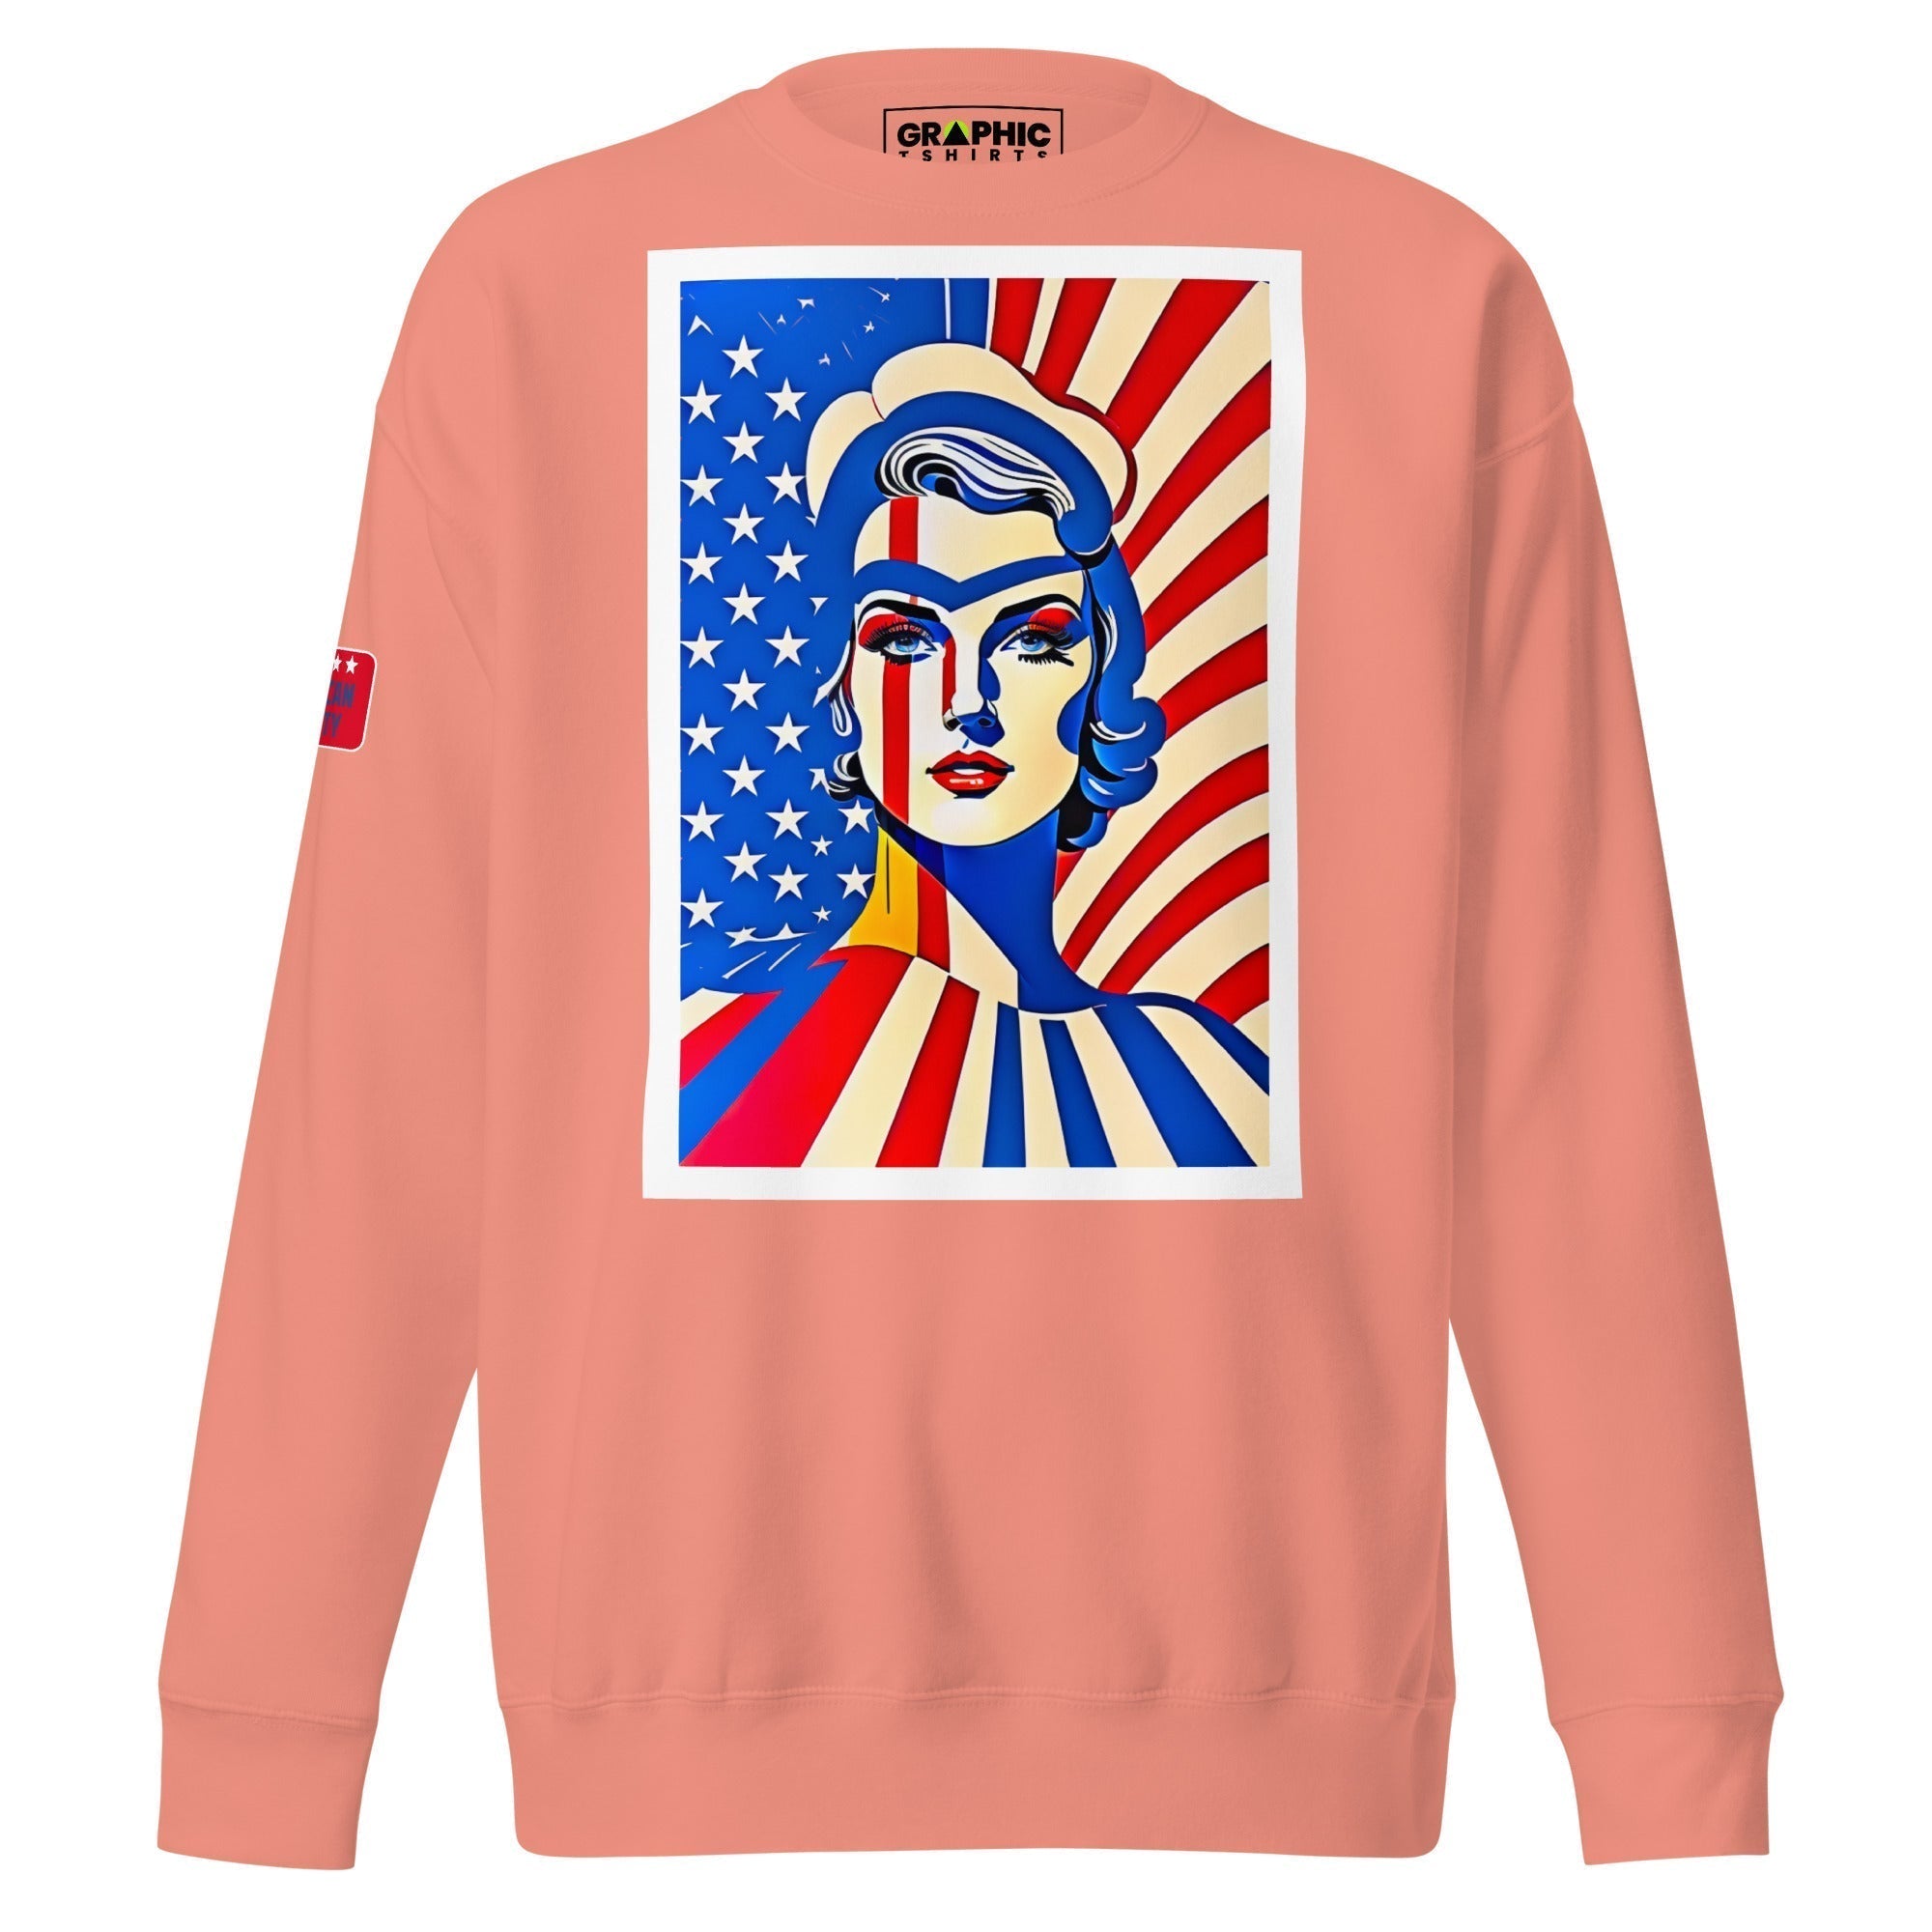 Unisex Premium Sweatshirt - American Liberty Series v.4 - GRAPHIC T-SHIRTS